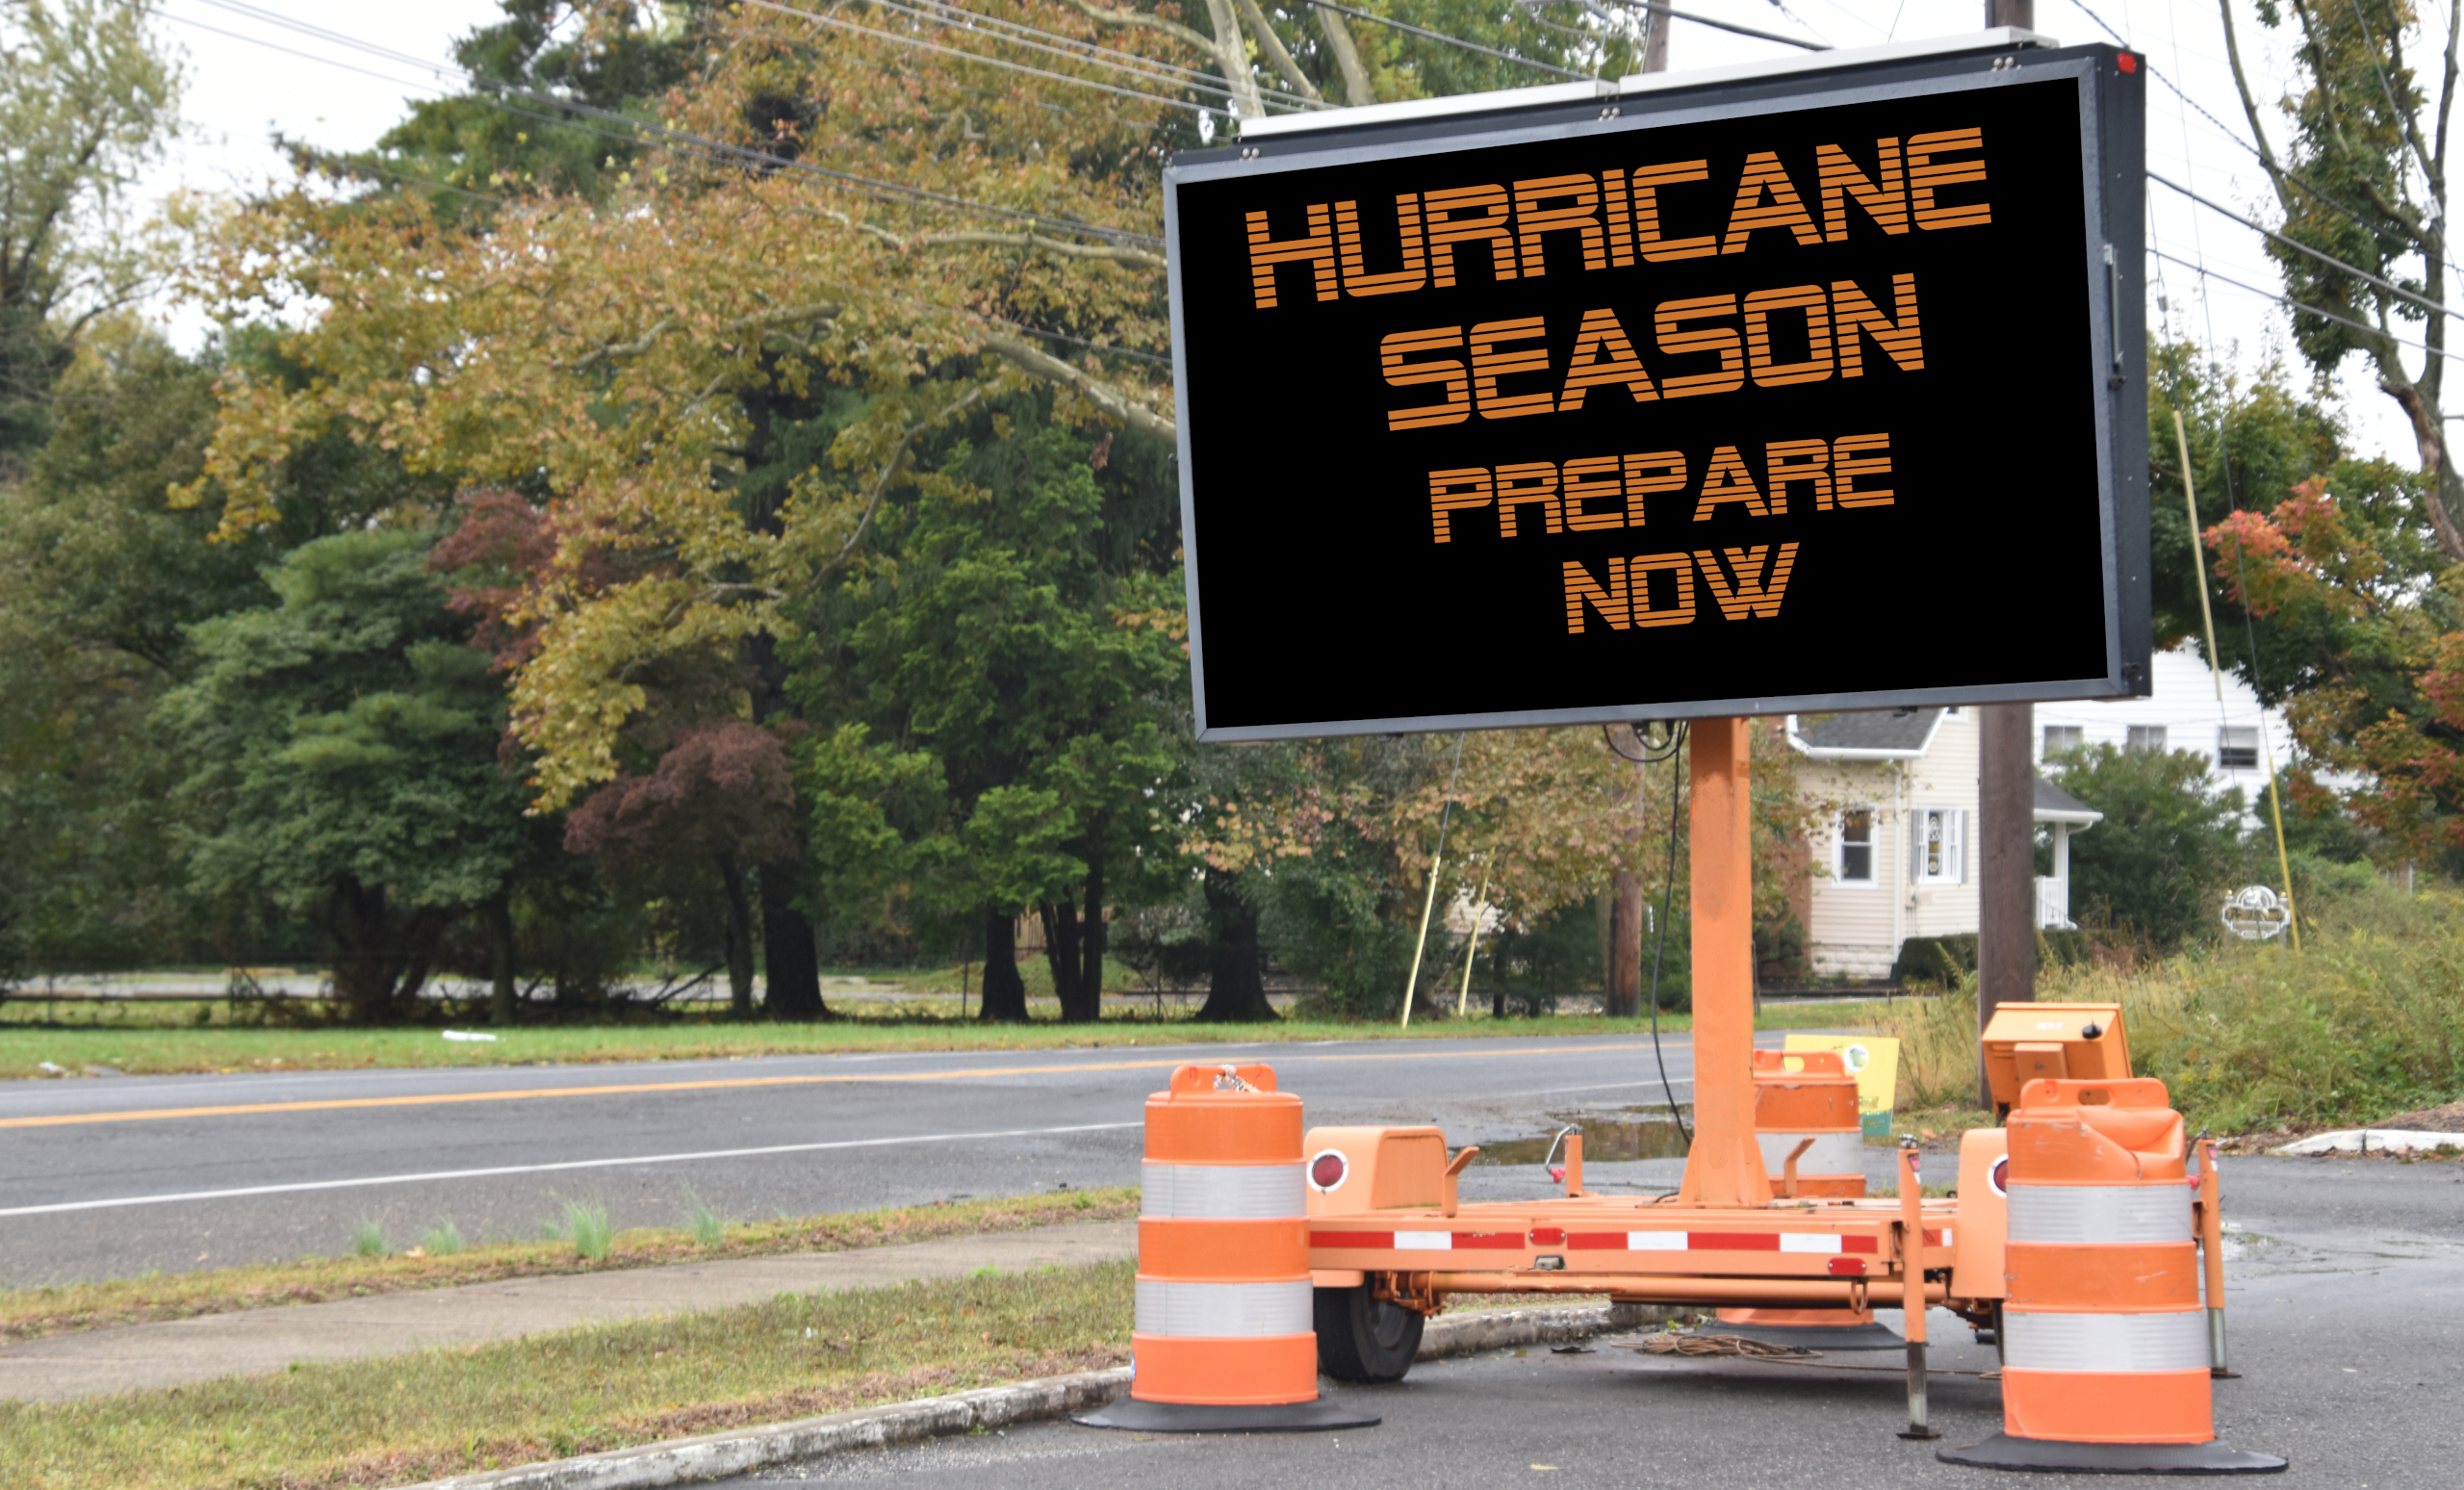 road sign - hurricane season prepare now